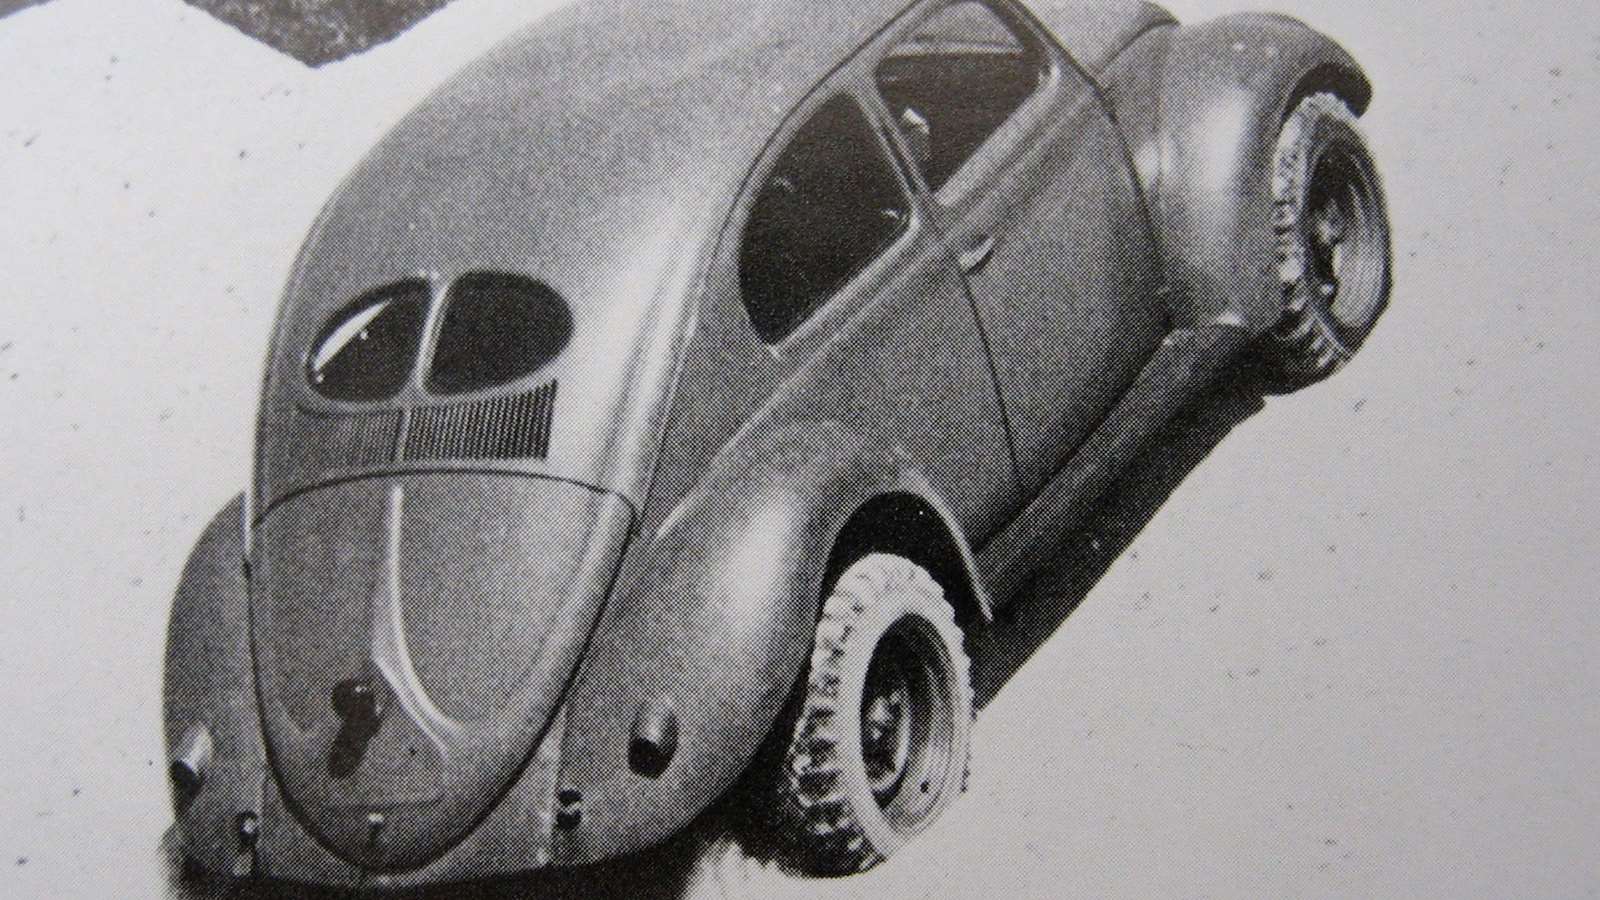  VW Archives - 1966 VW Accessories - German